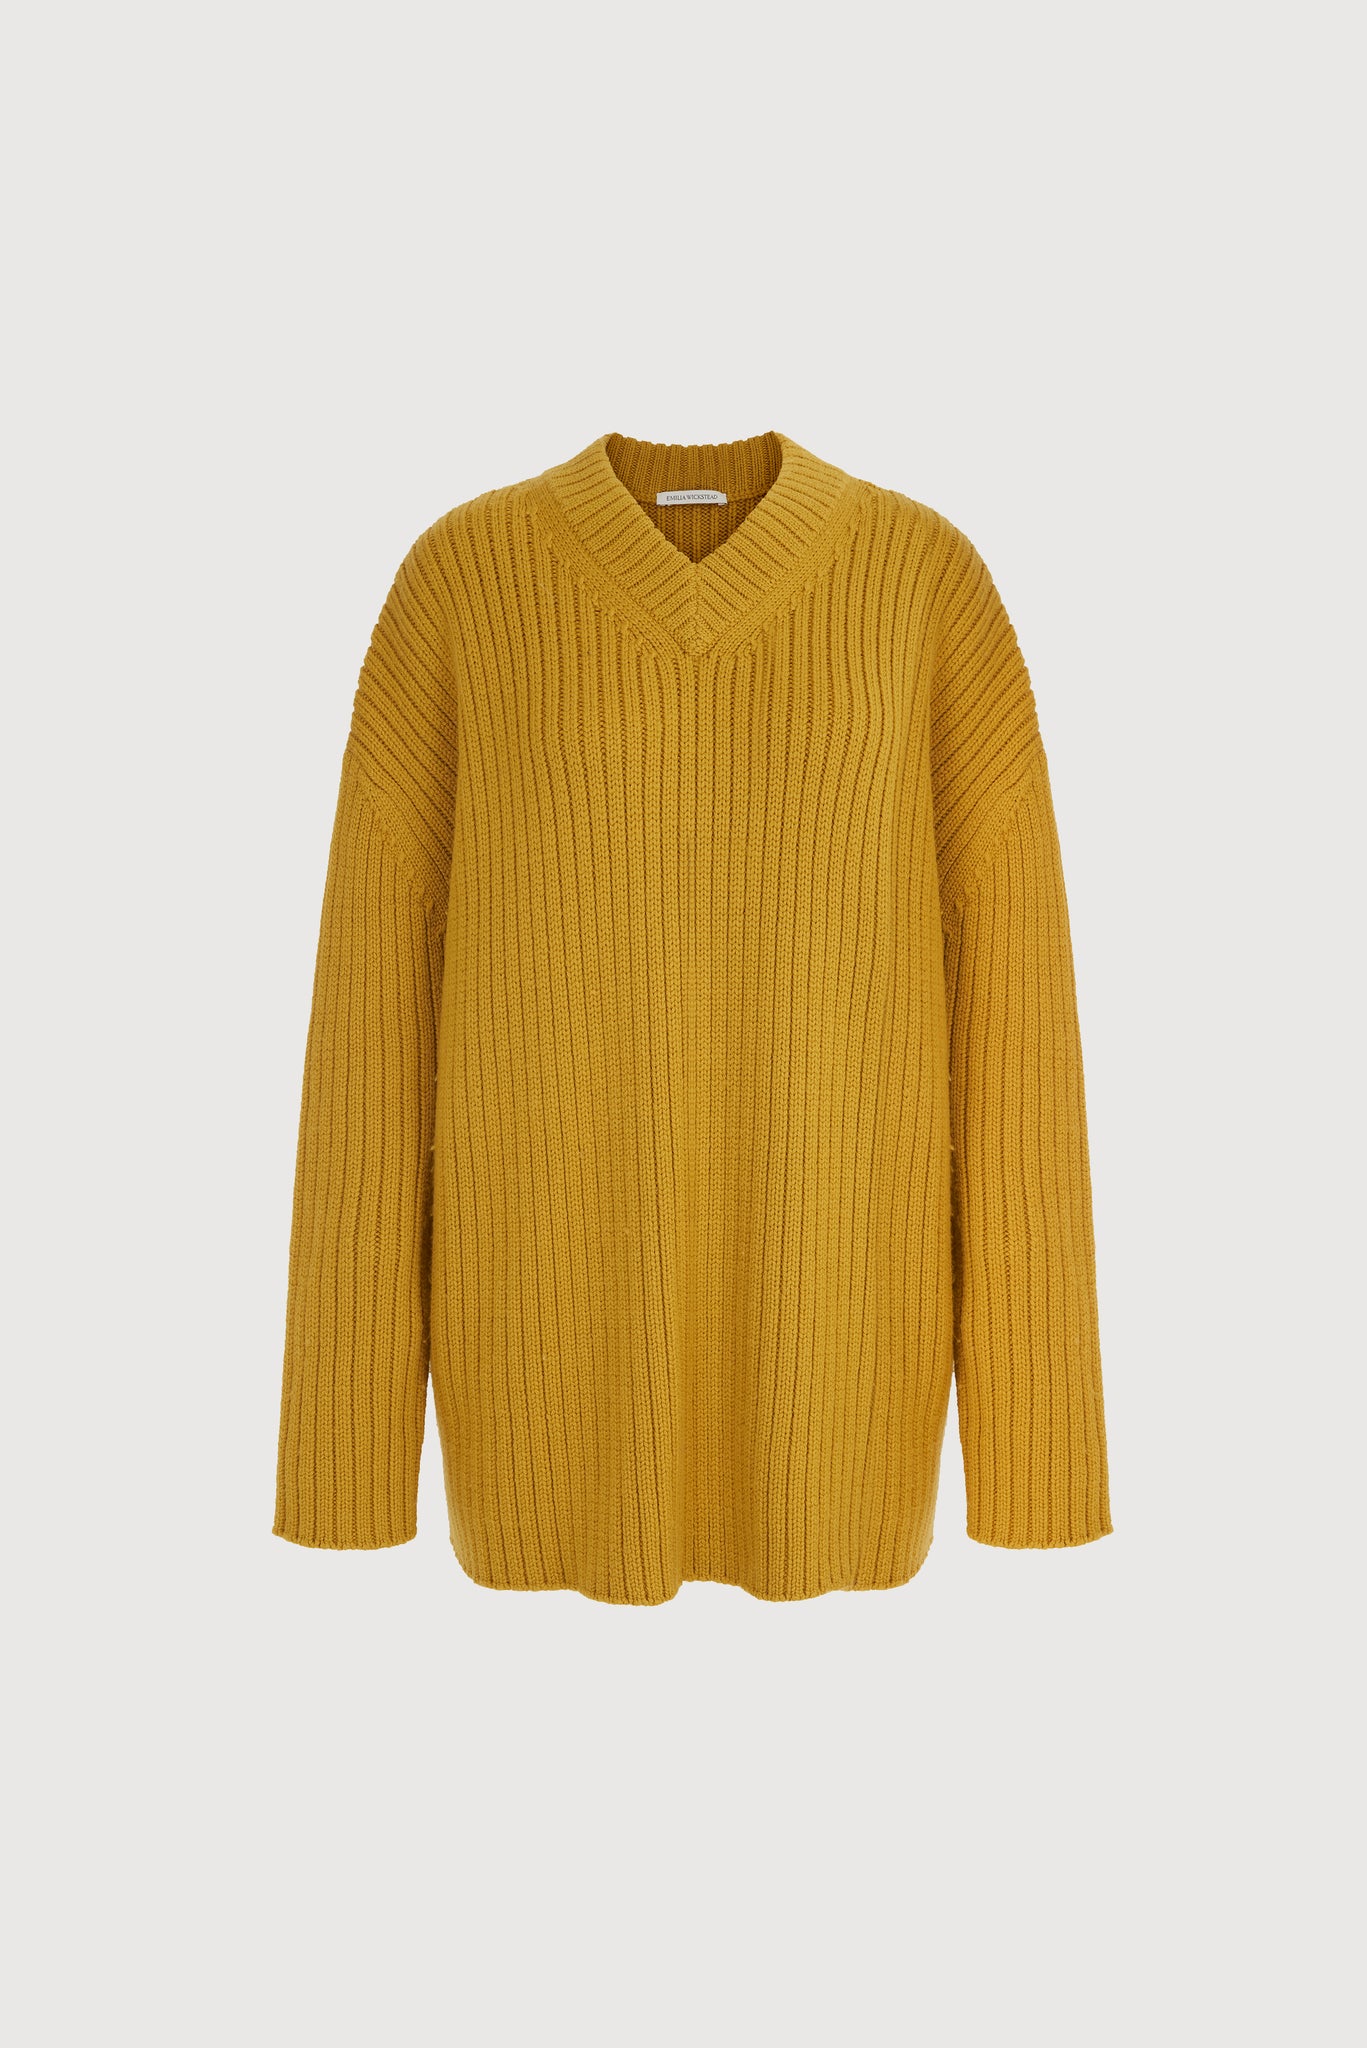 Ady V-Neck Knit Jumper in Mustard Yellow Wool